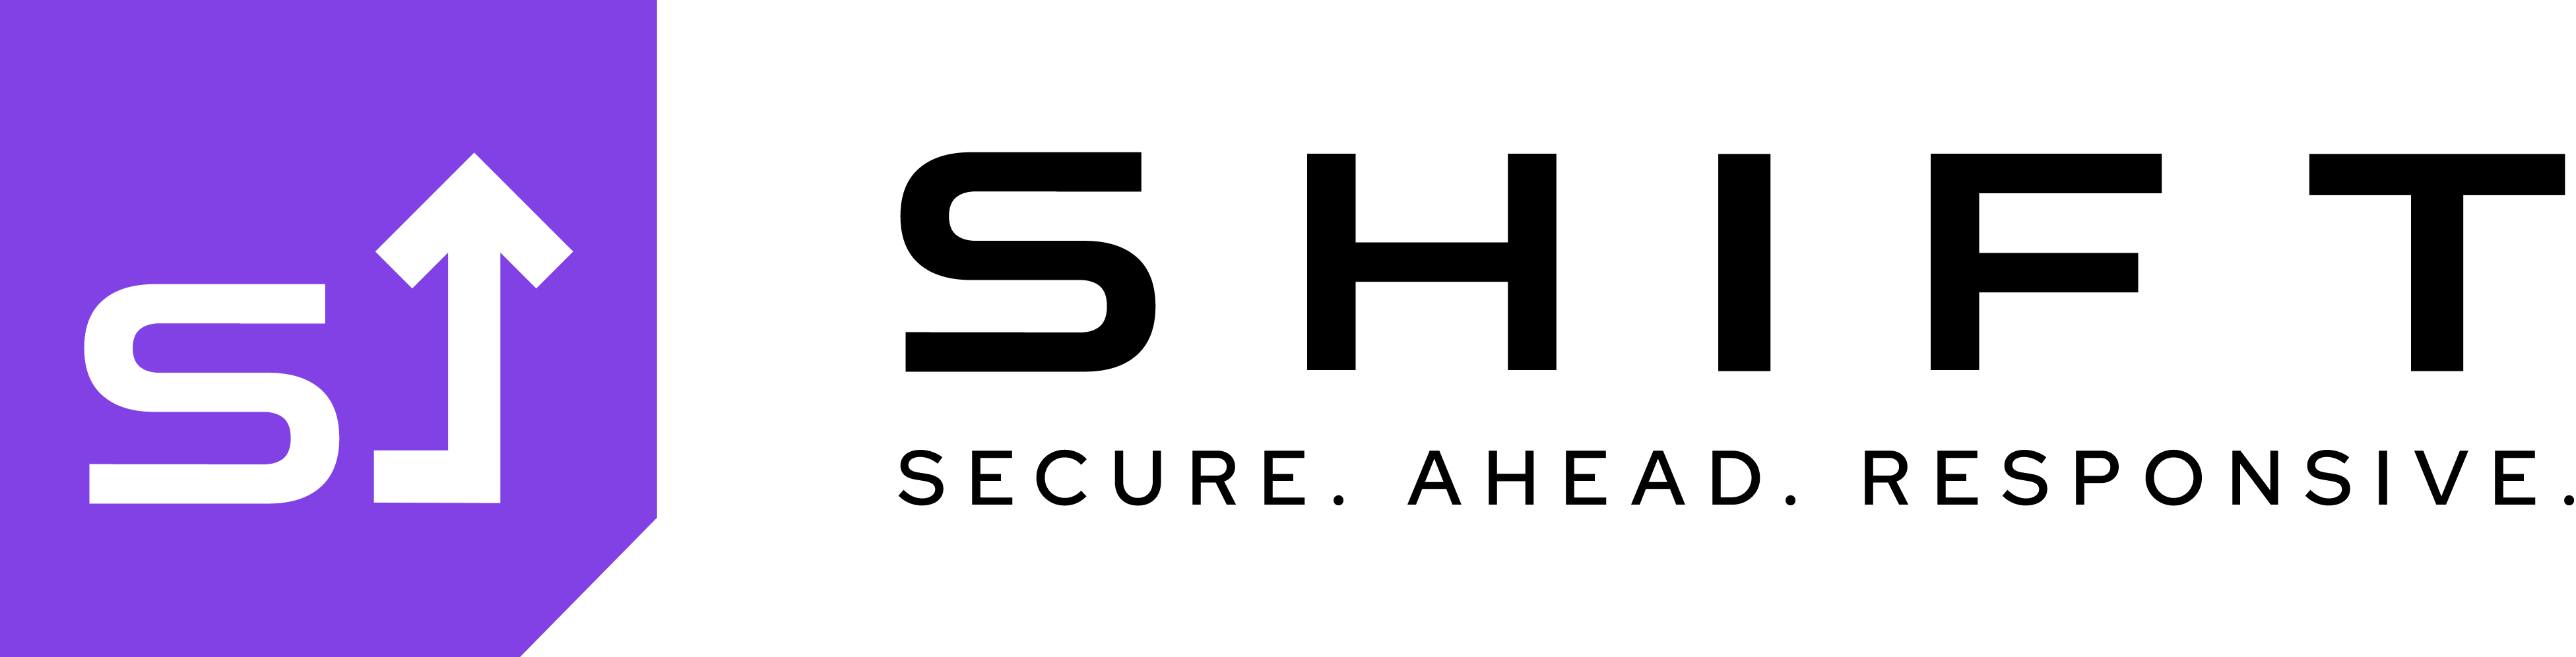 shift-logo-black